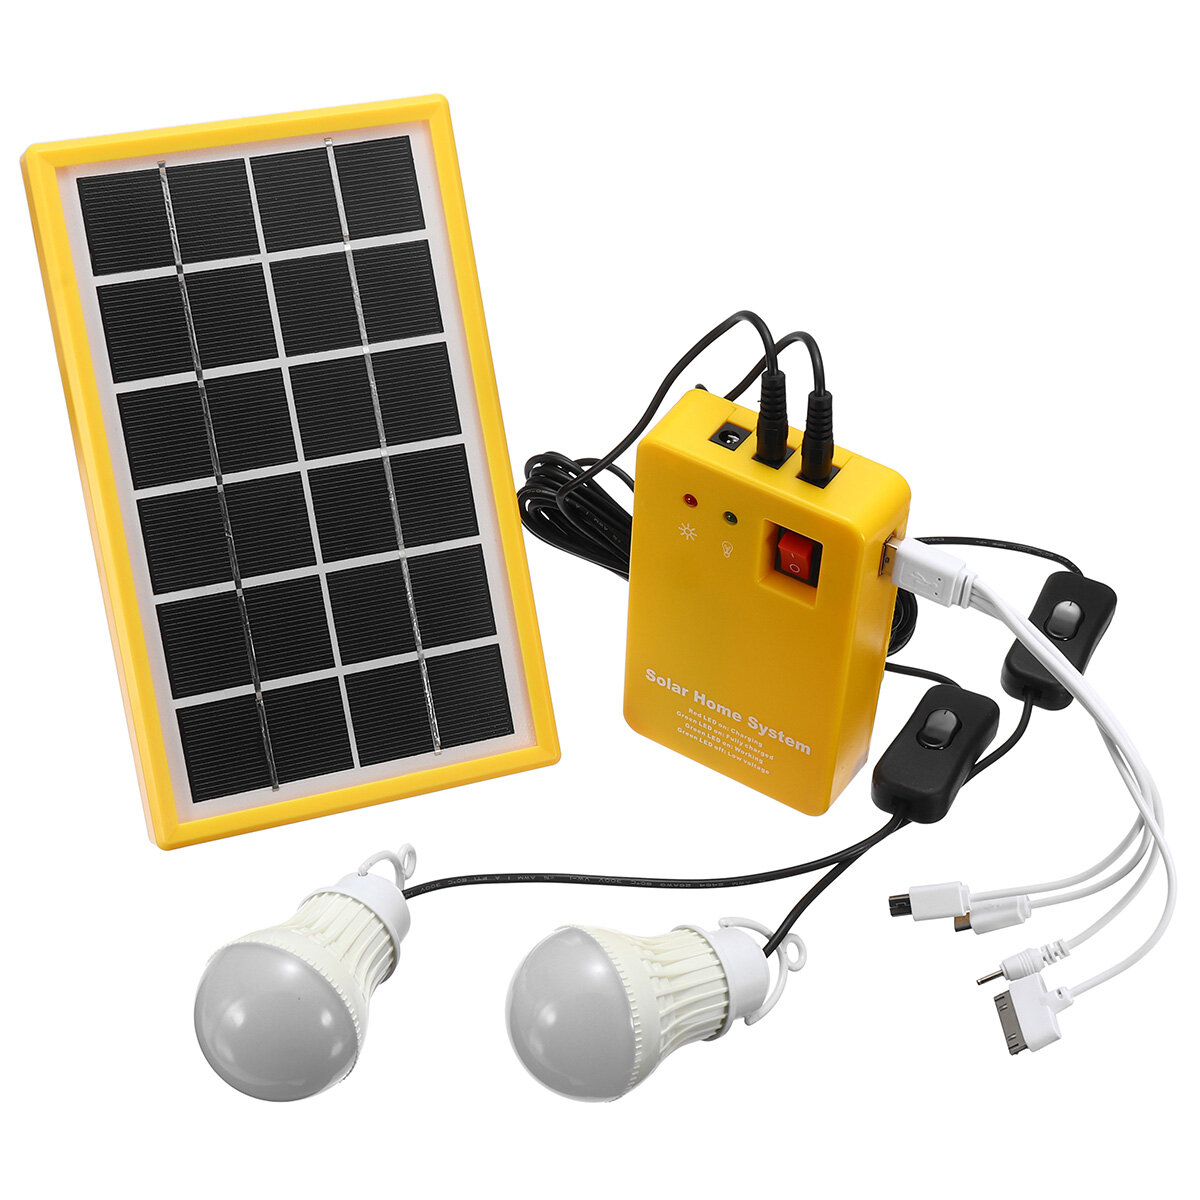 Żarówki zasilane solarem Solar Power Panel Generator Kit 5V USB z EU za $20.99 / ~84zł